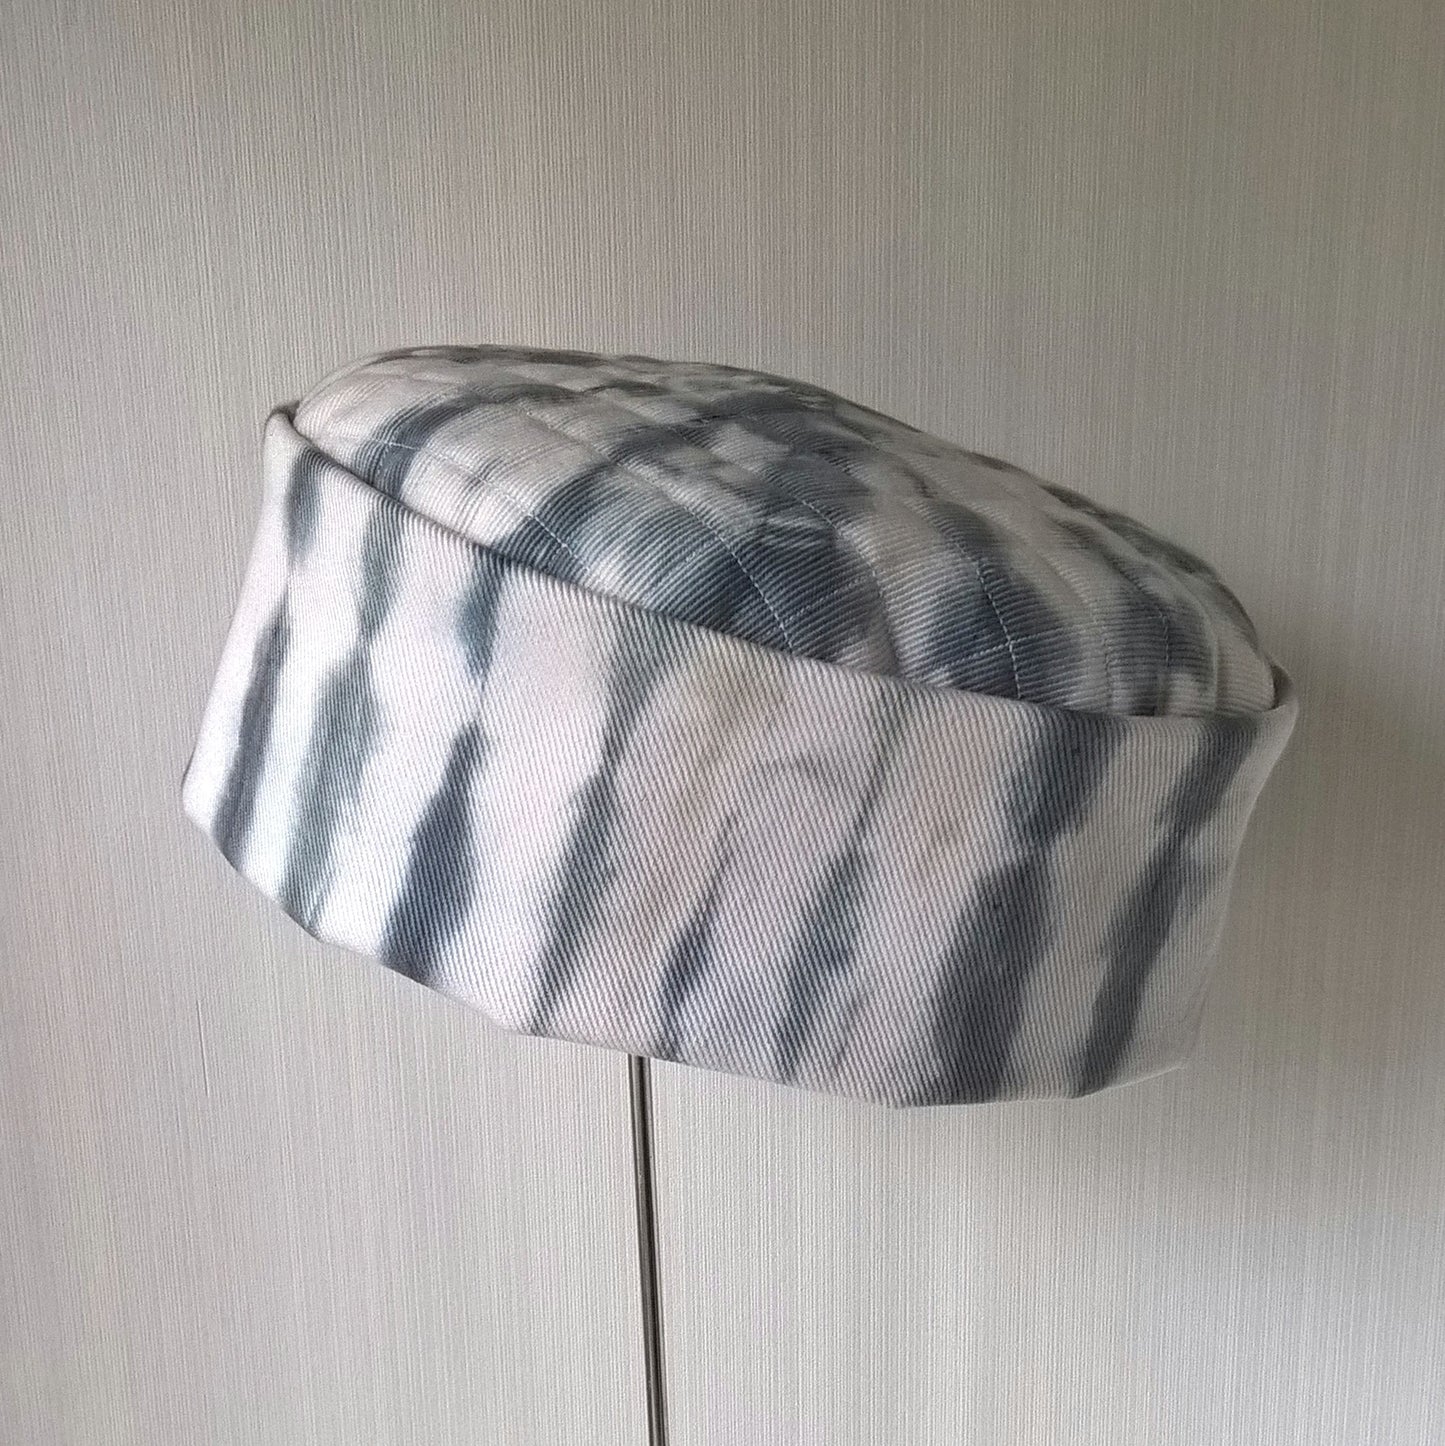 White pillbox shaped cap with black shibori tie dye